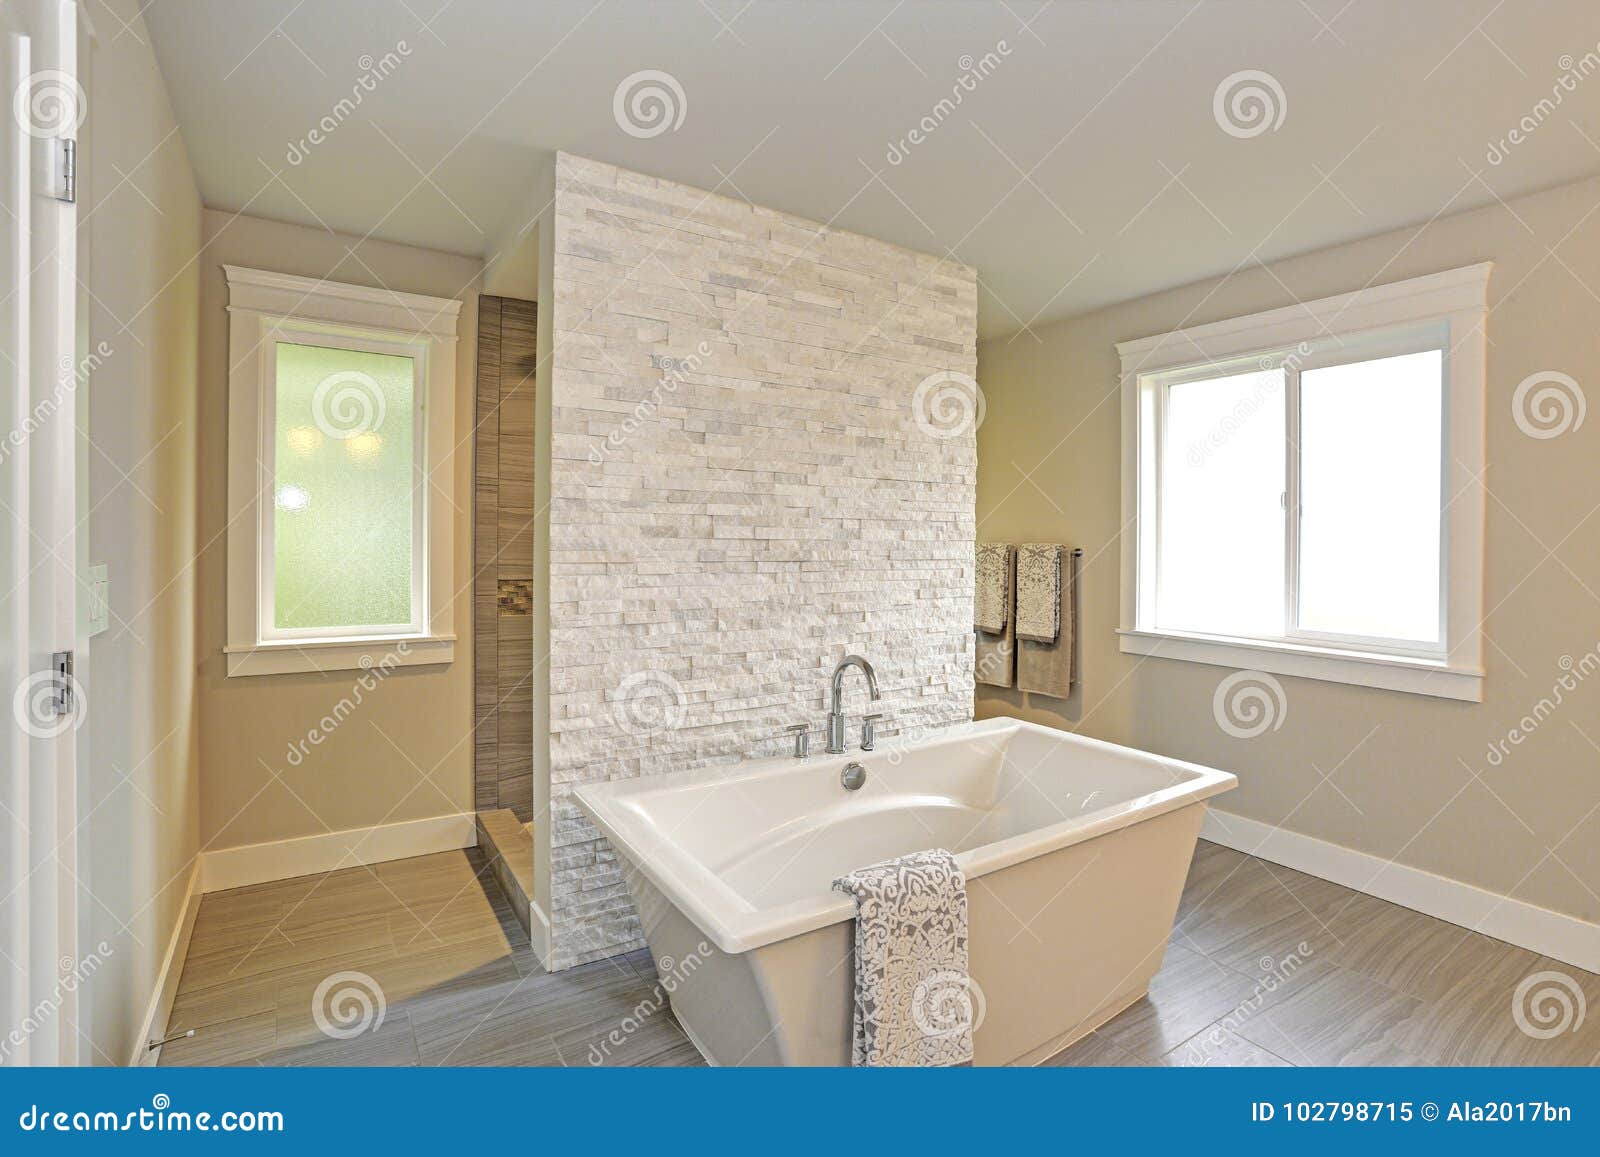 Amazing Master Bathroom With A Freestanding Bathtub Stock Image